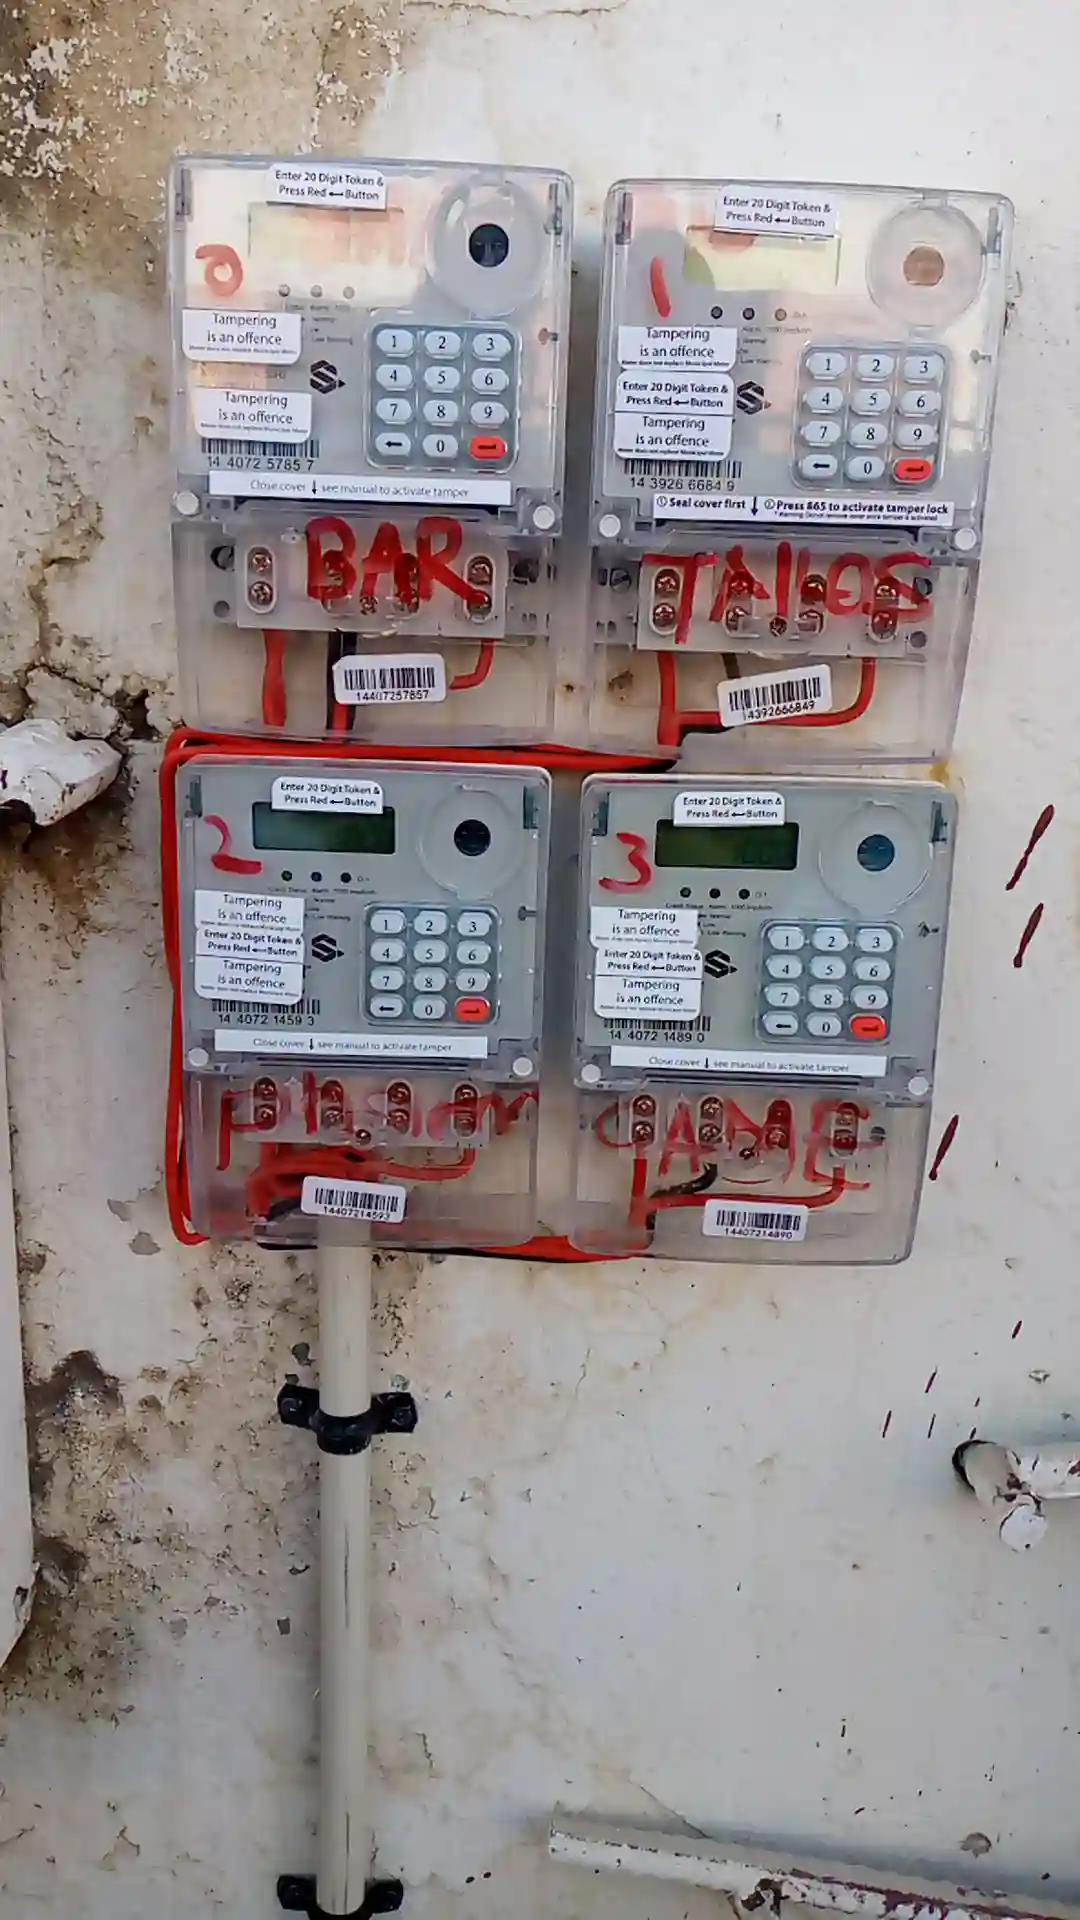 💡🔌 Electricity split metering